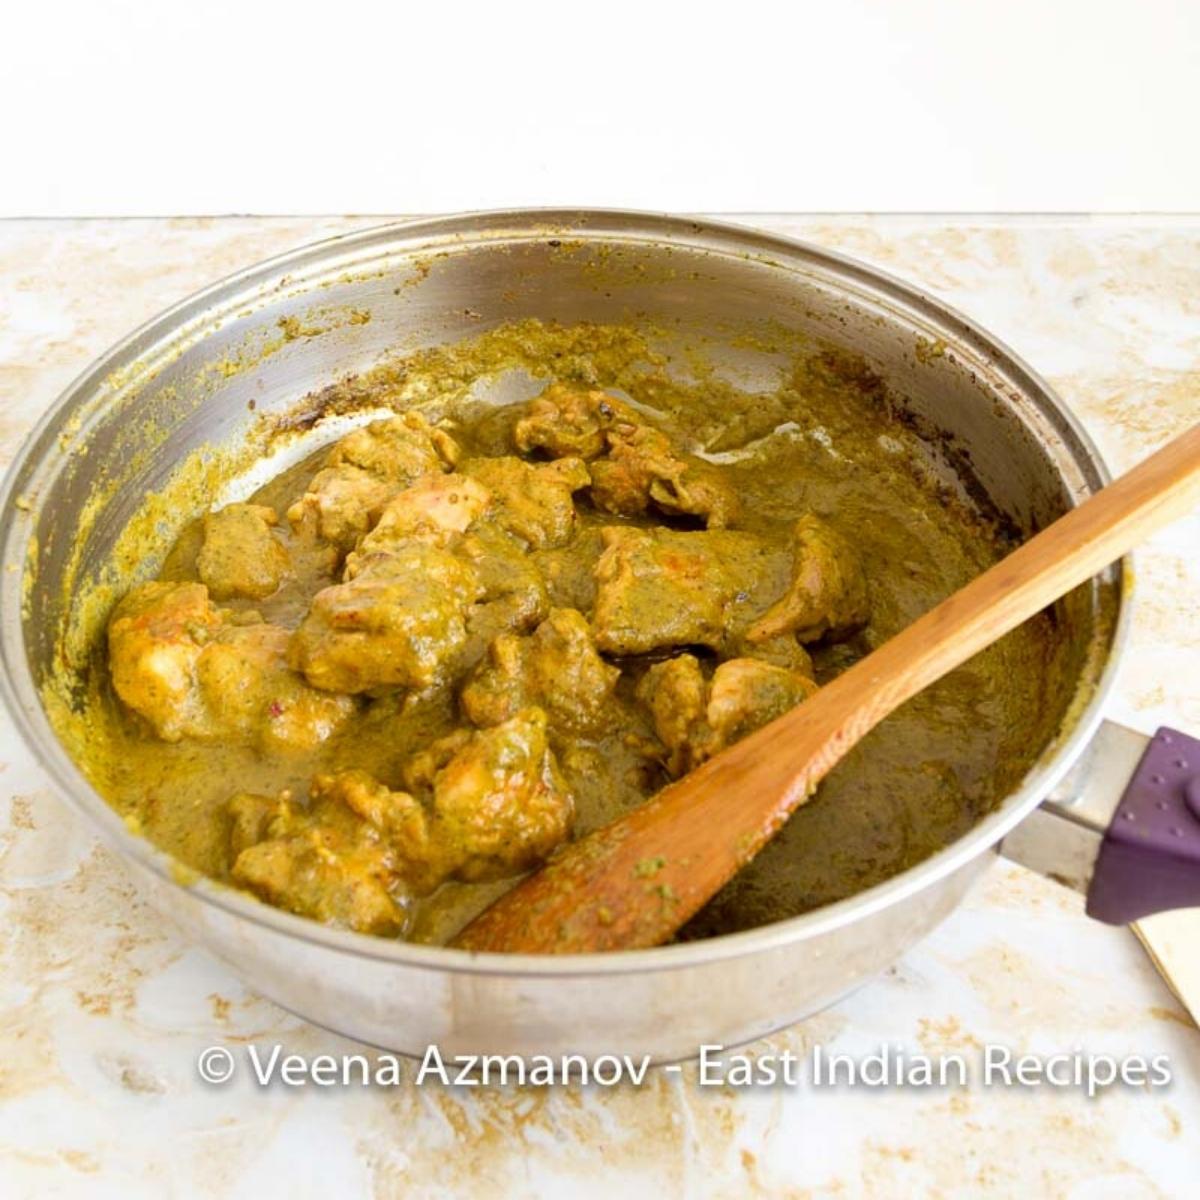 Easy Chicken Stir Fry Recipe - One Pan (15 Mins) - Veena Azmanov